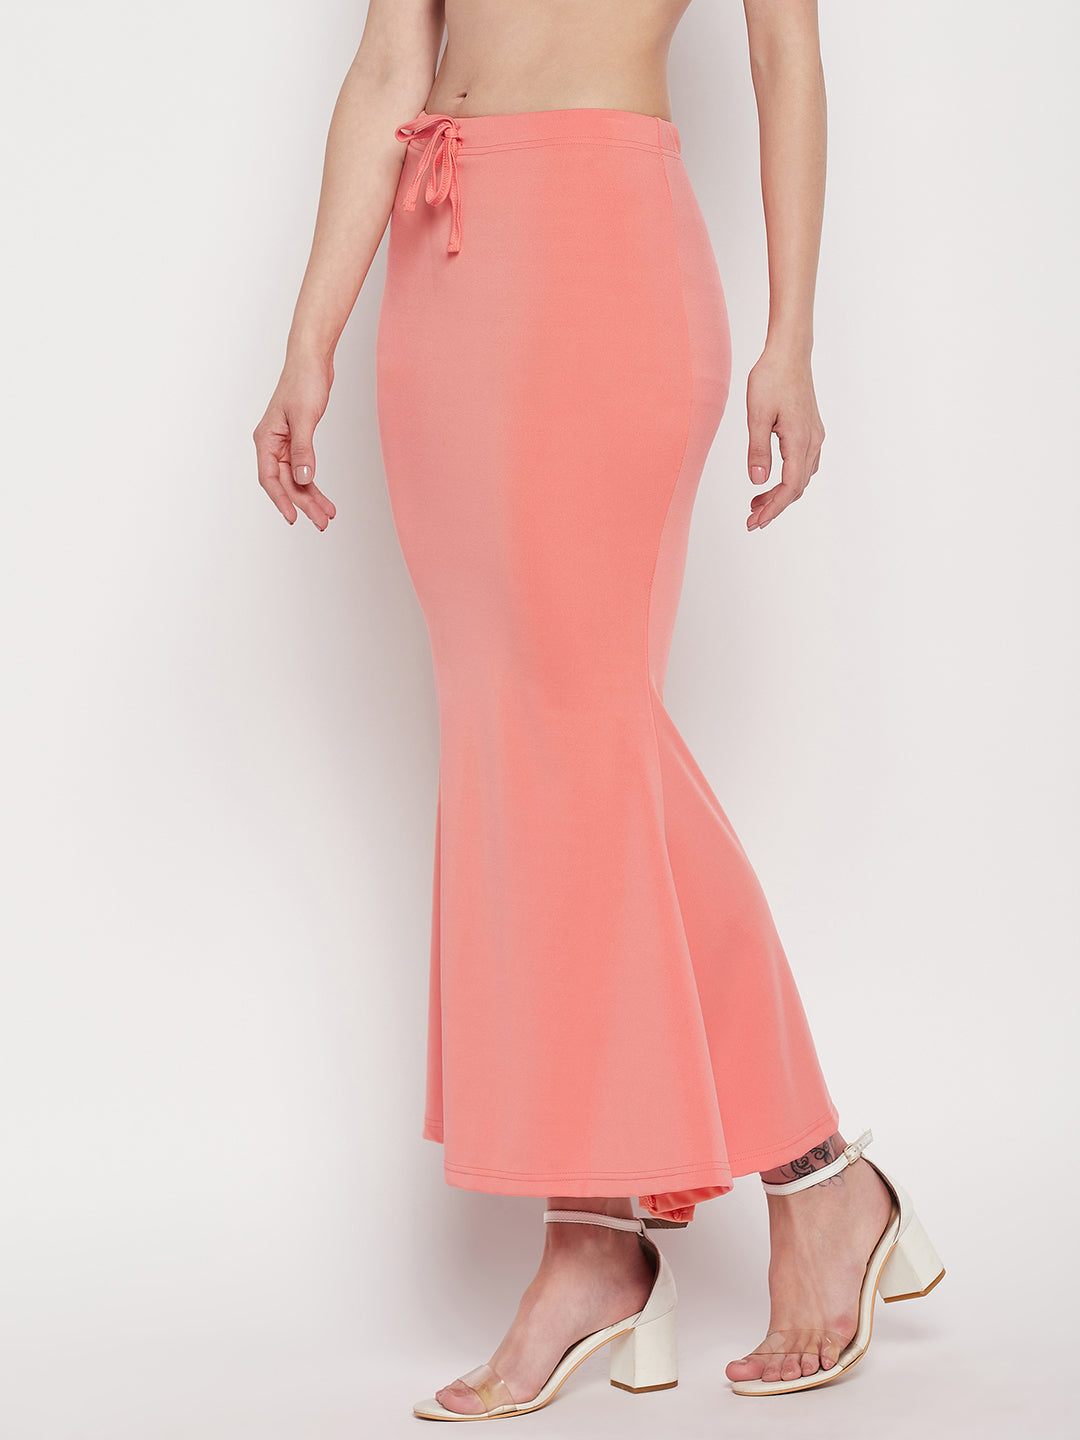 Plain Cotton Saree Shapewear, Black,Pink, Size: Medium at Rs 180